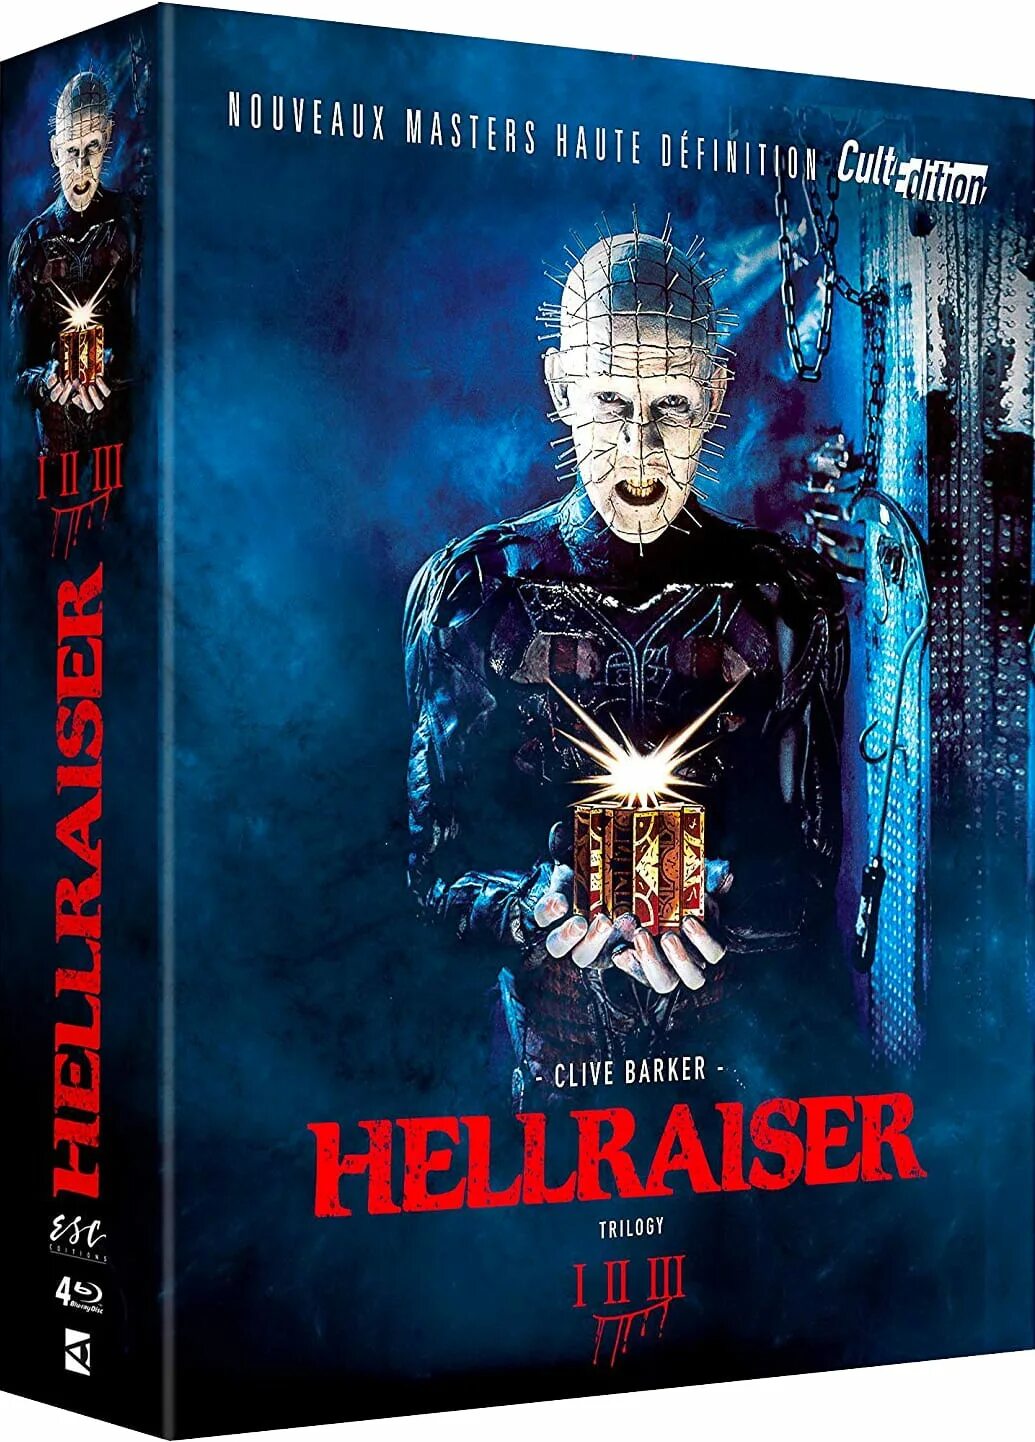 Восставший из ада 4 Blu-ray. 2022 - Hellraiser - обложка диска - Blu-ray. Восставший из ада (Hellraiser), 1987. Клайв Баркер Восставший из ада.